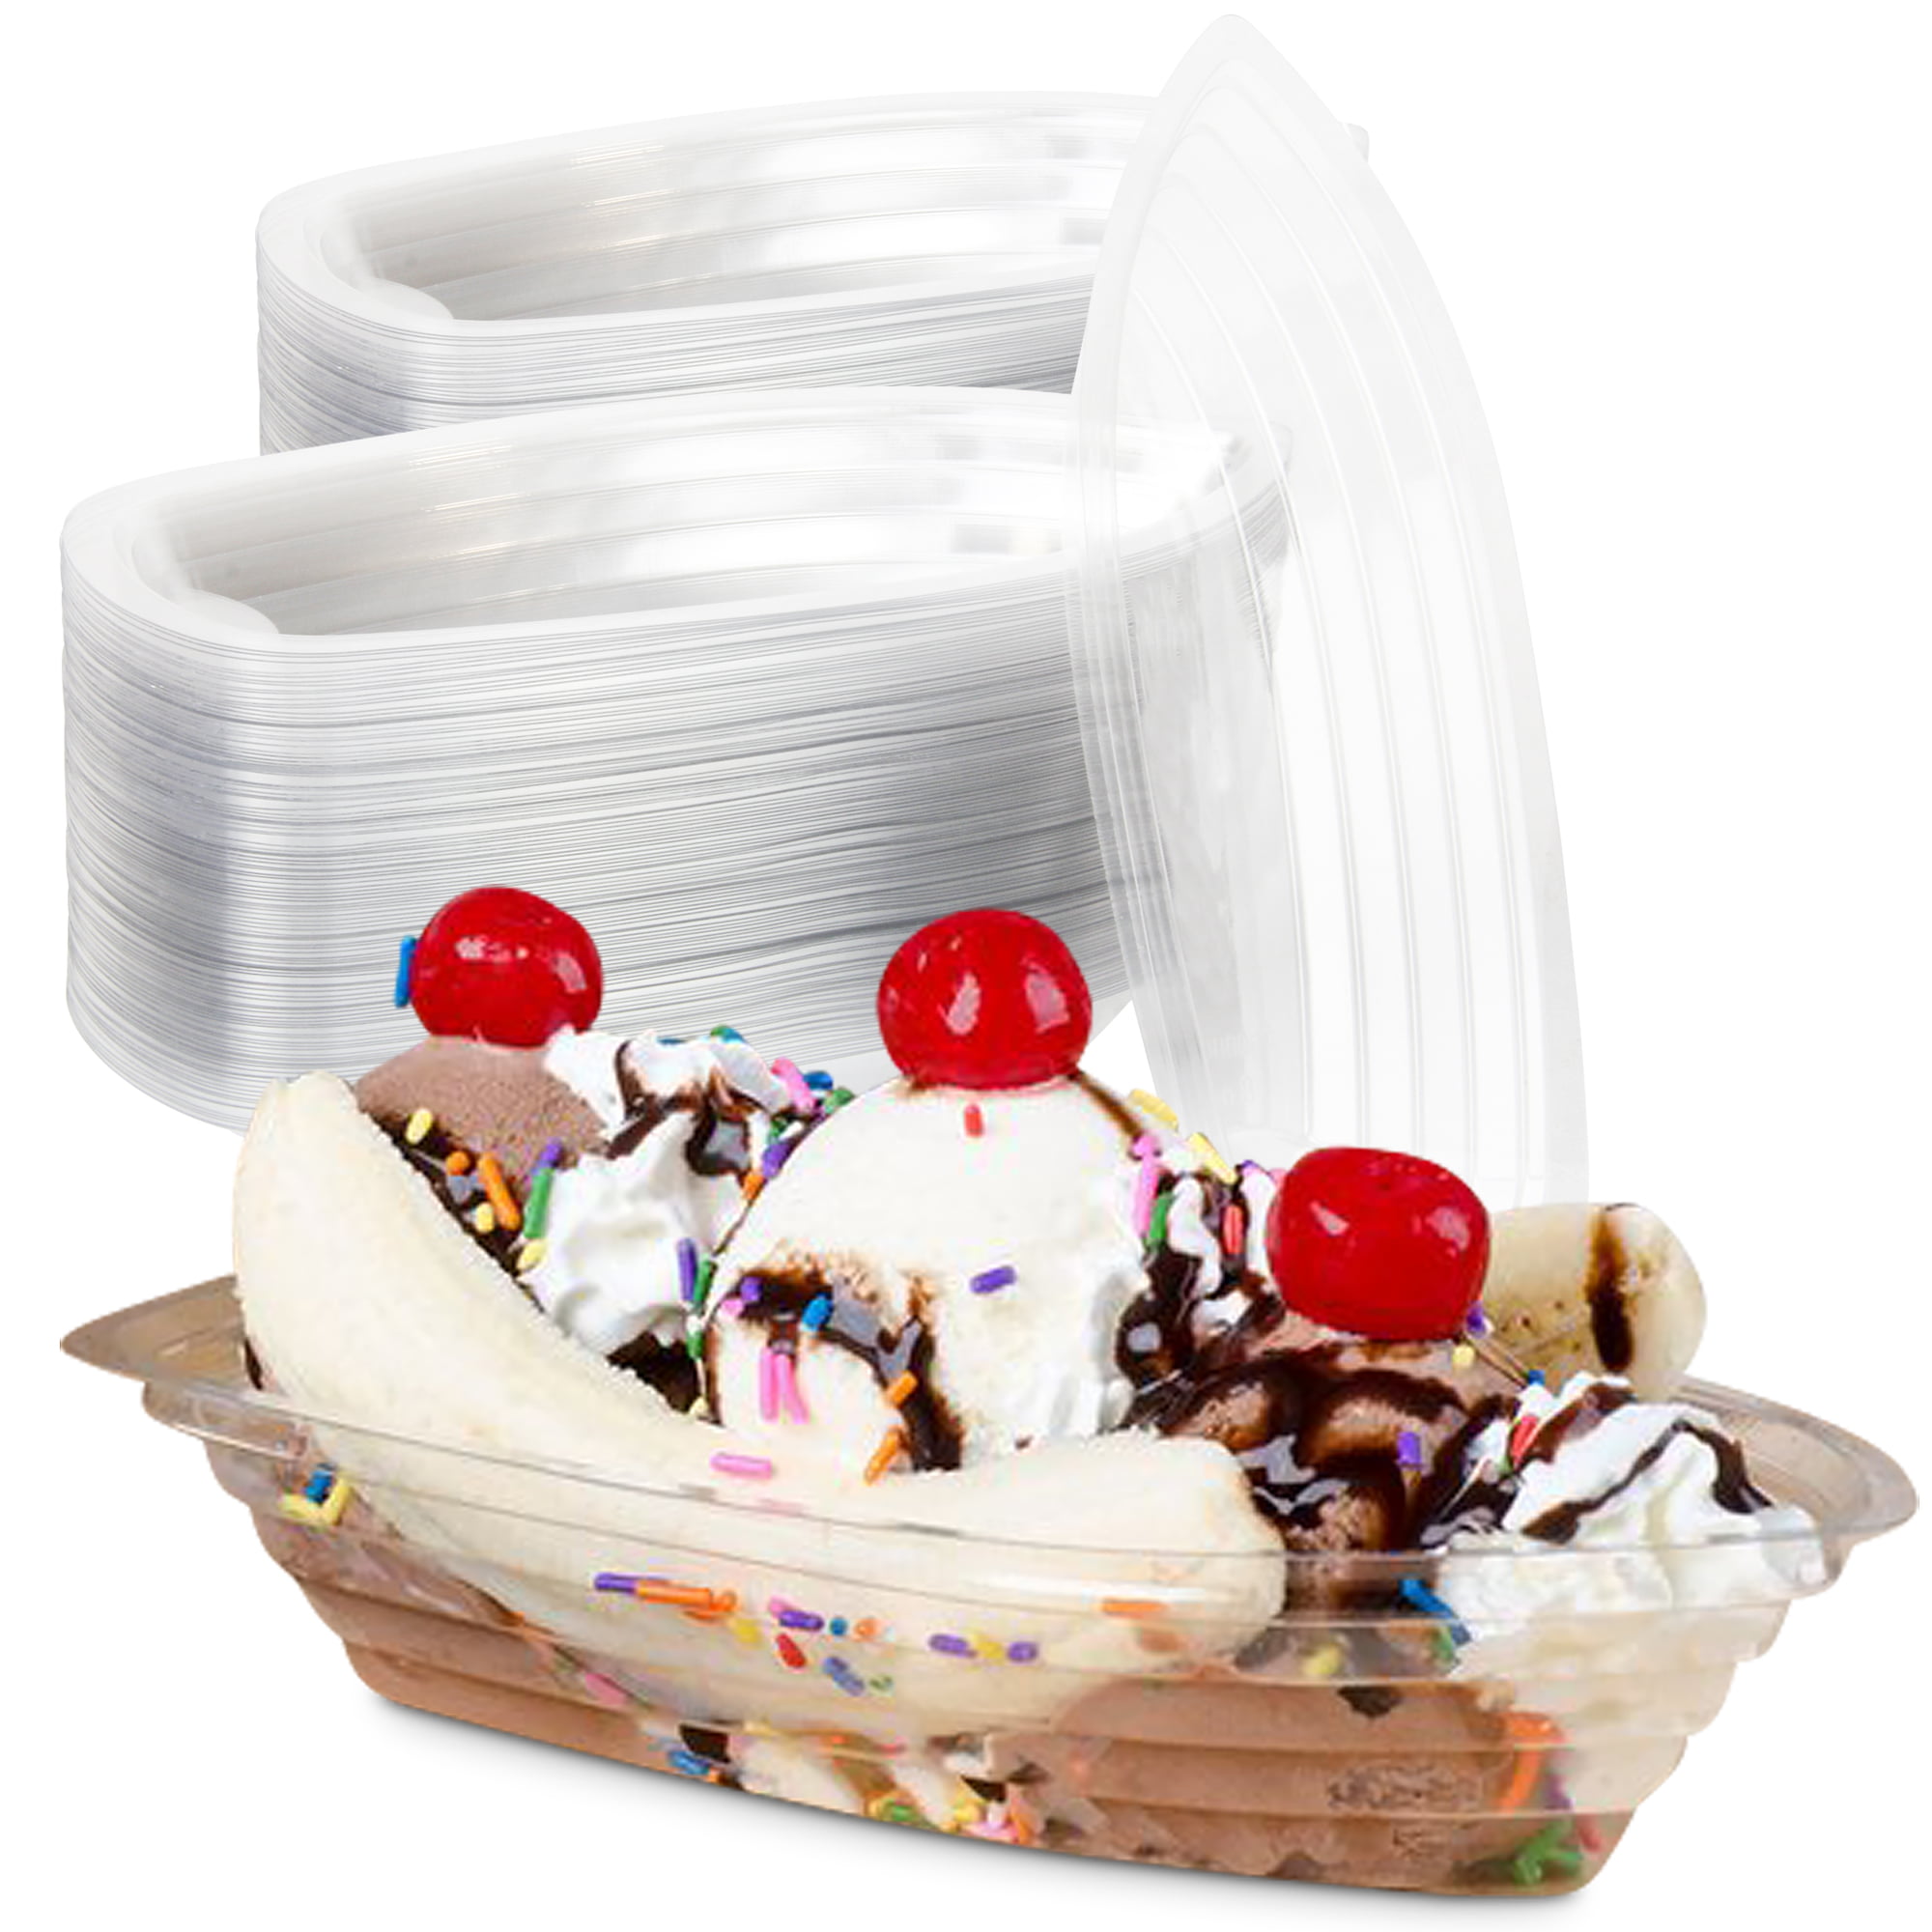 8 Oz Clear Plastic Boat Container Banana Split Dessert Ice Cream Sundaes 500ct for sale online 